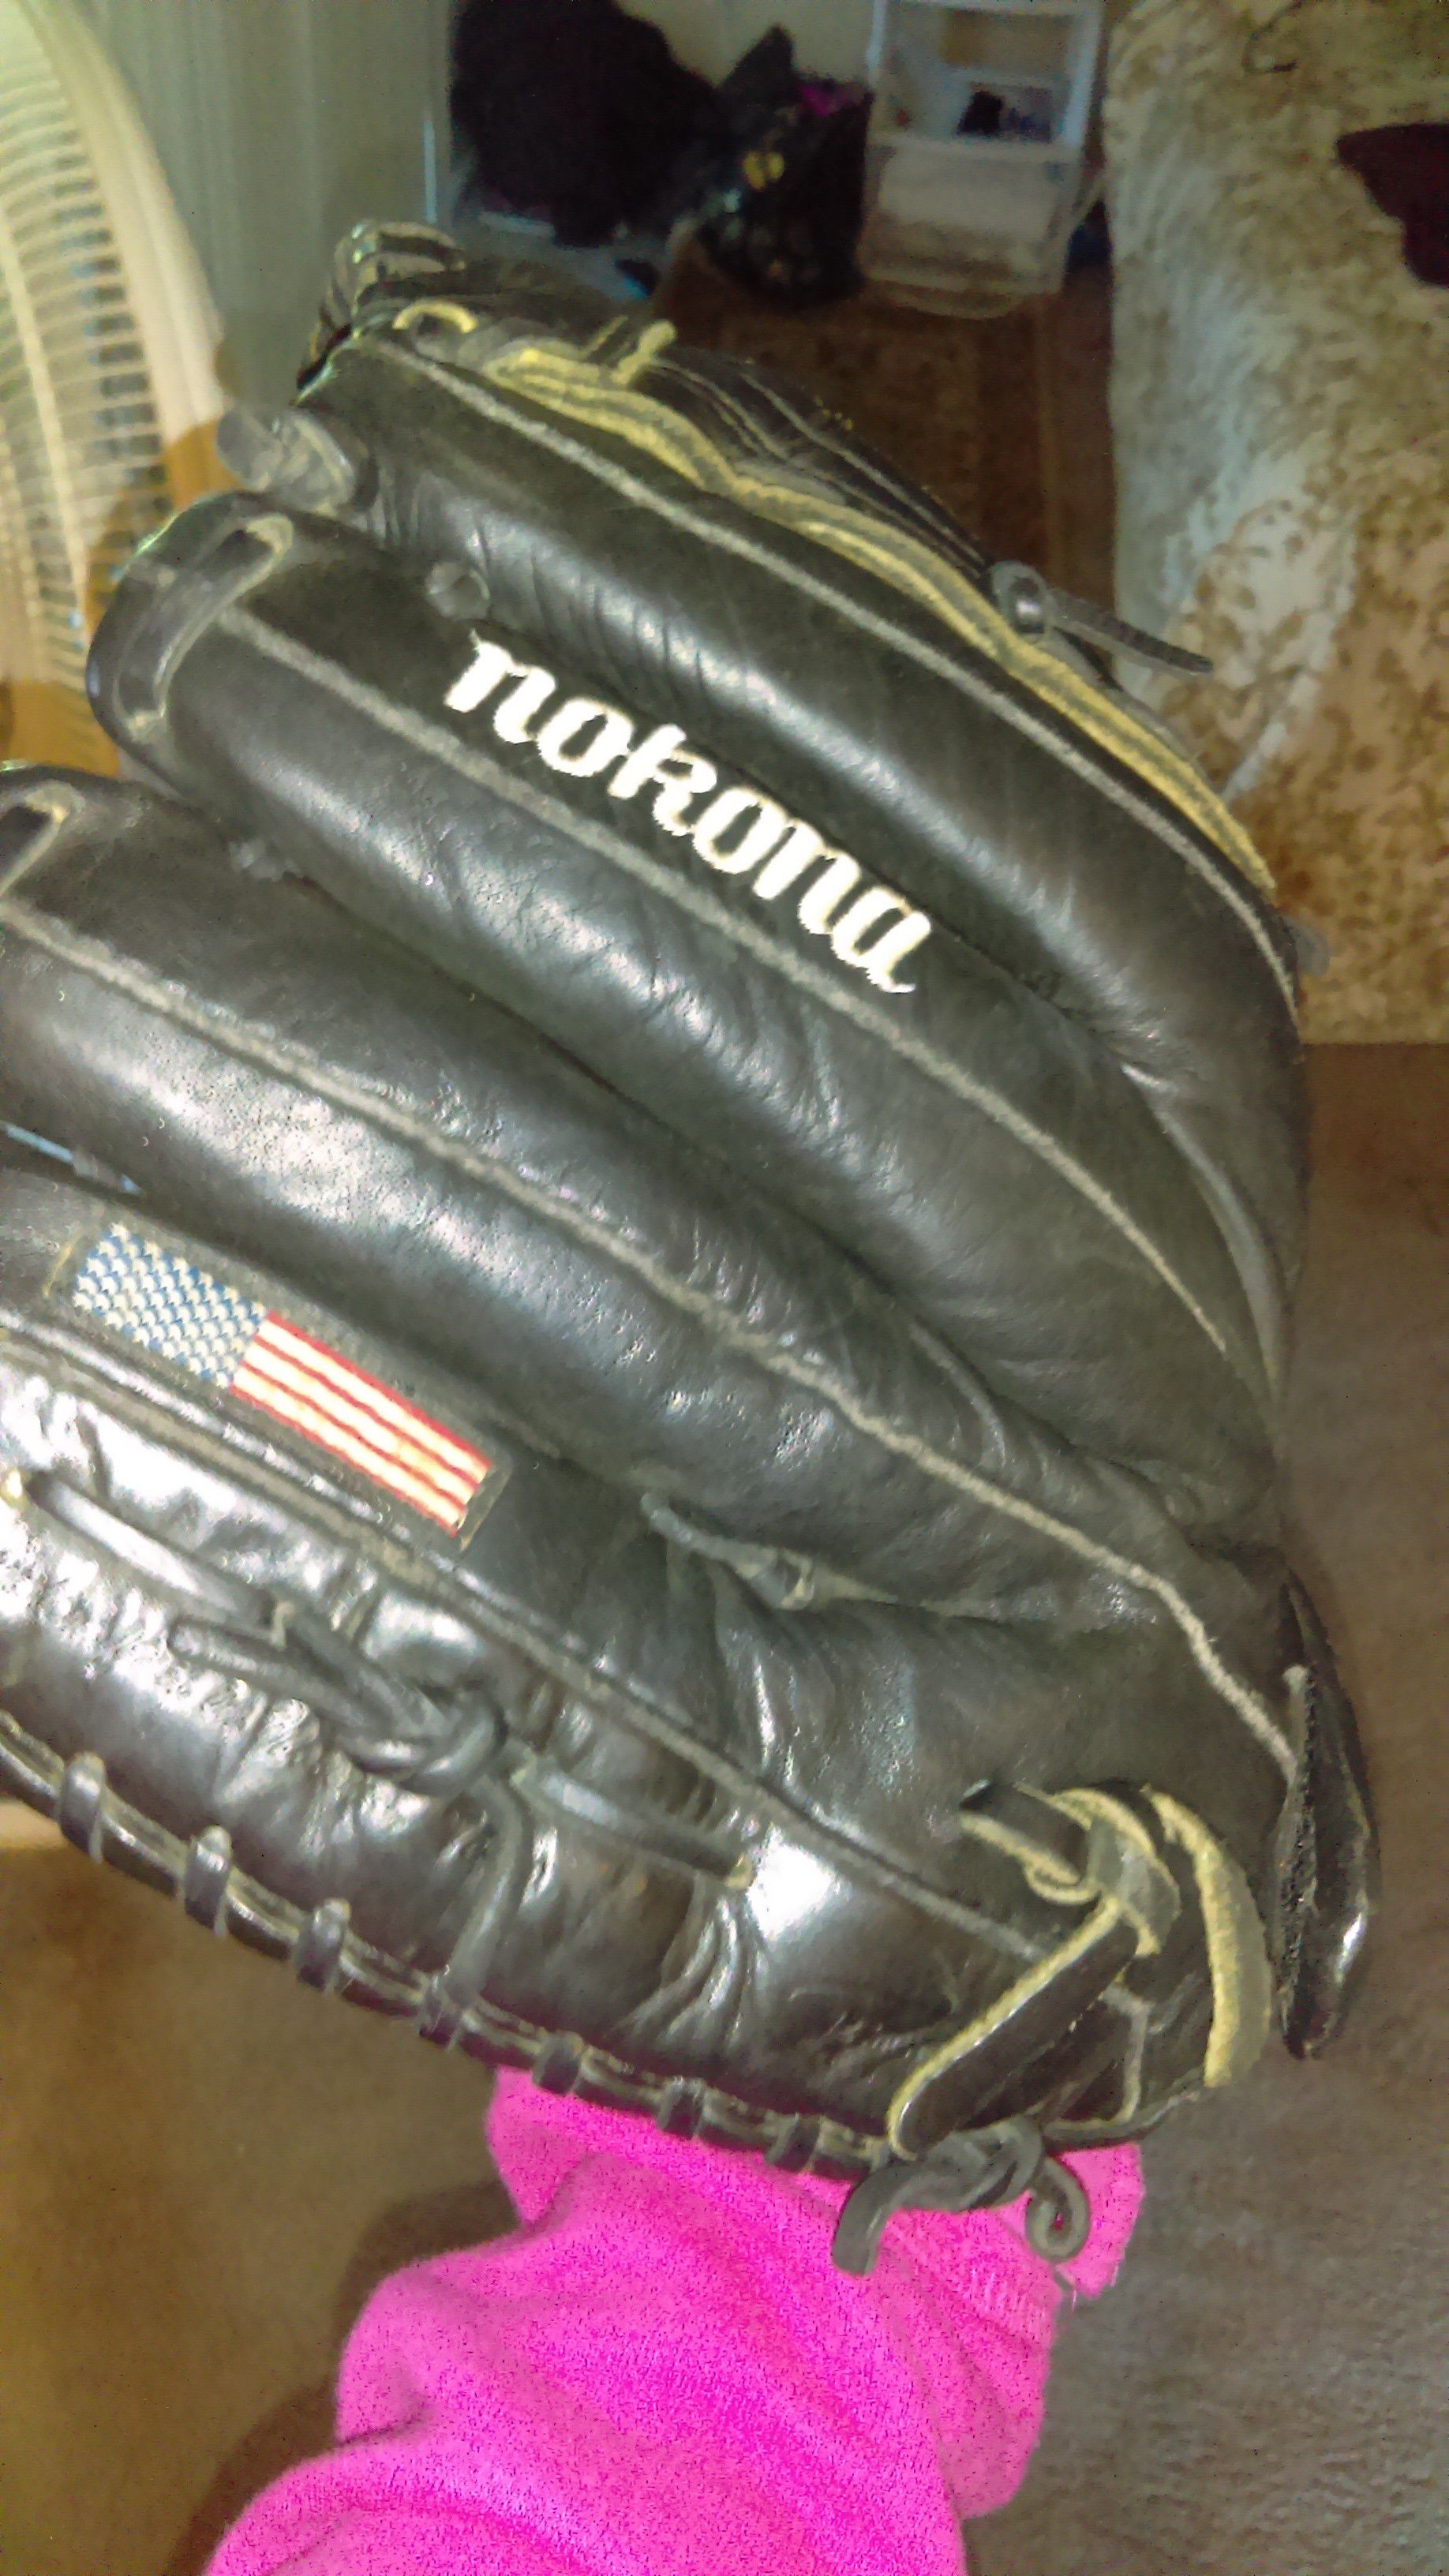 Nokano leather soft ball glove